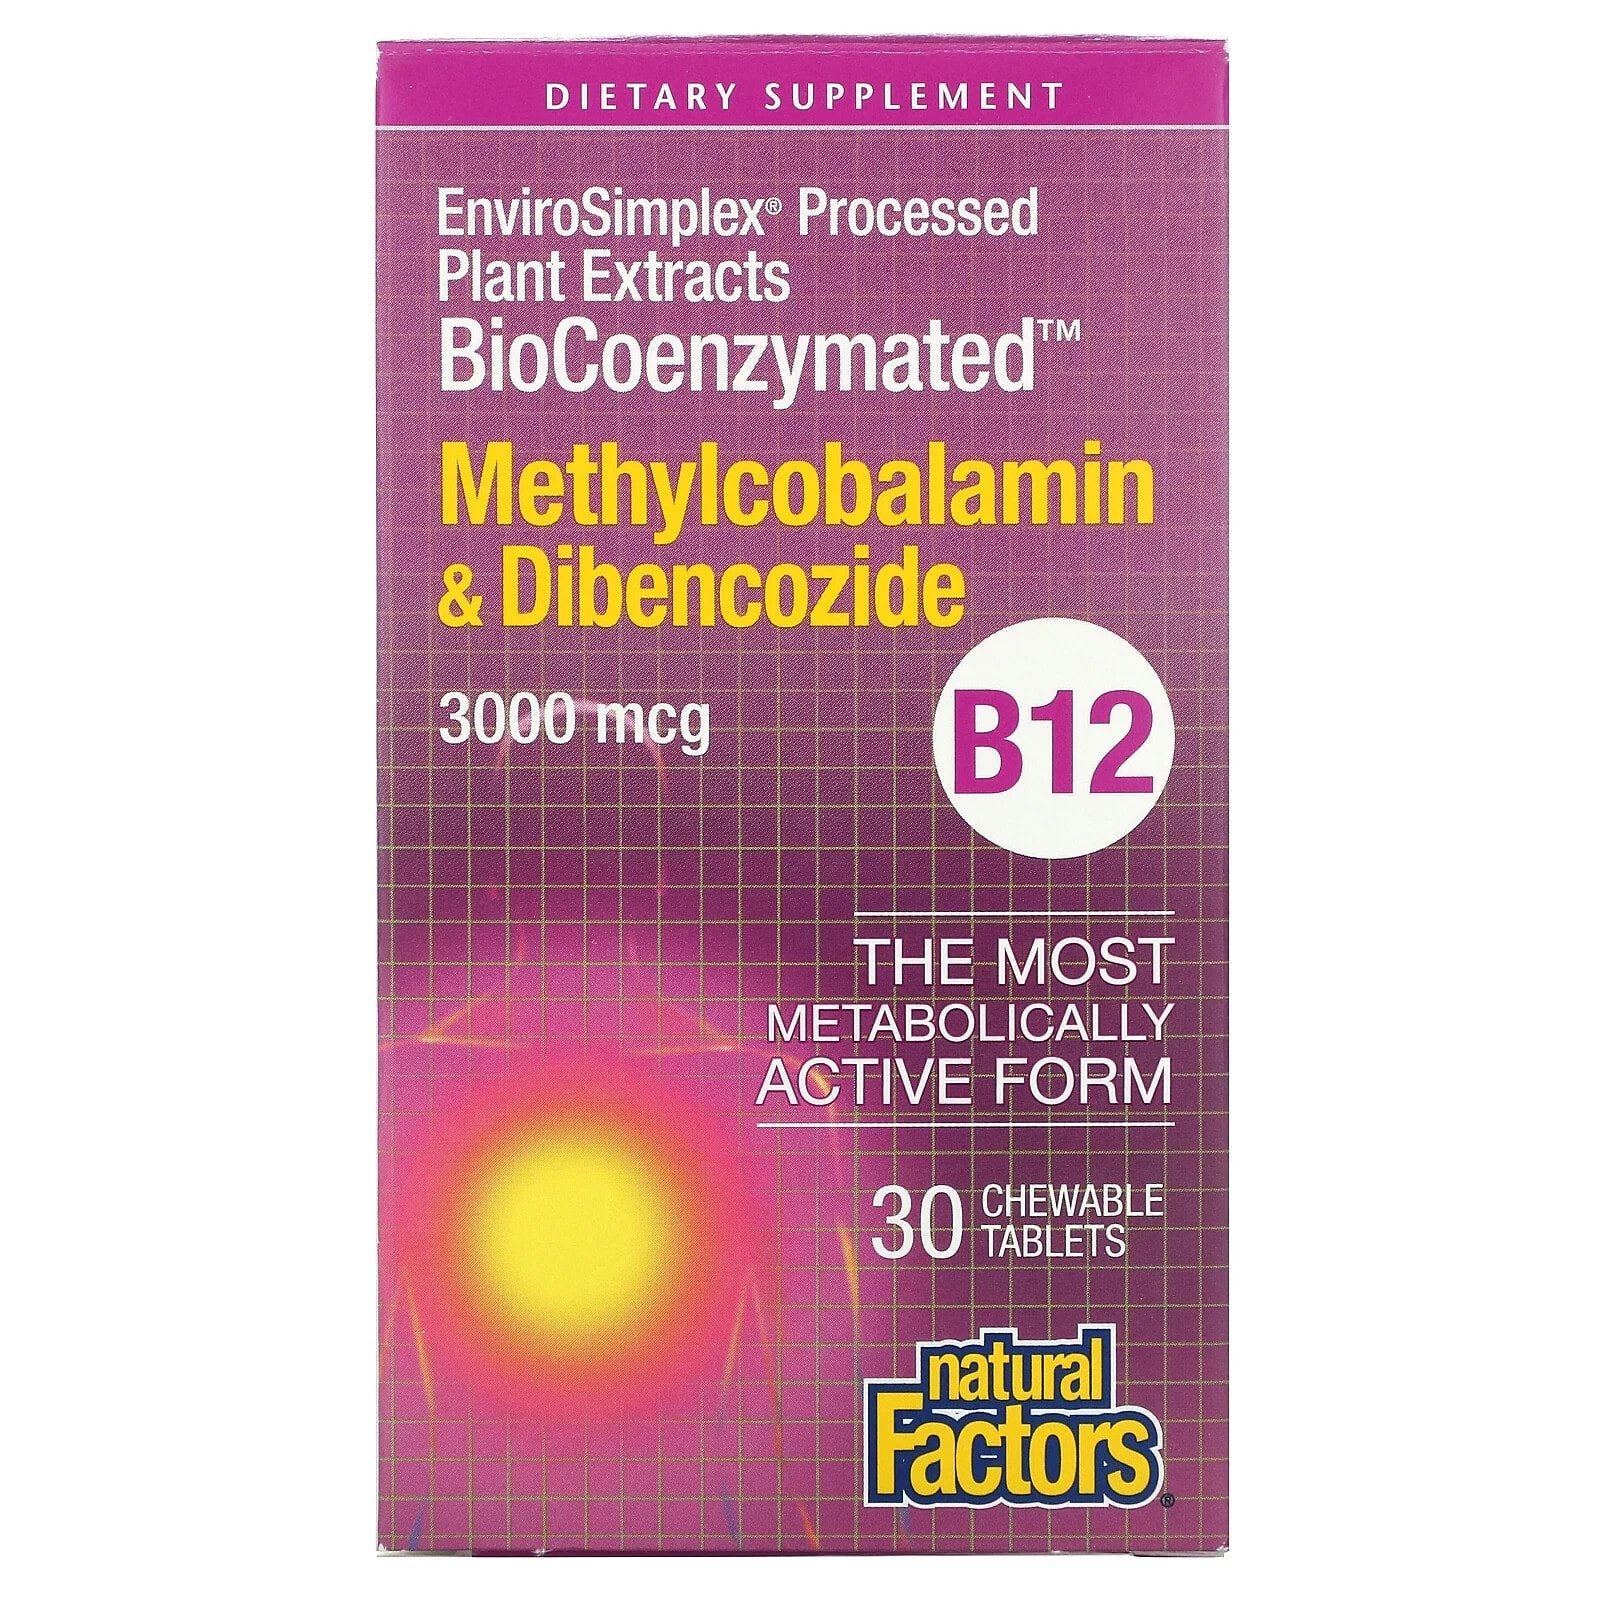 BioCoenzymated, B12, Methylcobalamin & Dibencozide, 3,000 mcg, 30 Chewable Tablets